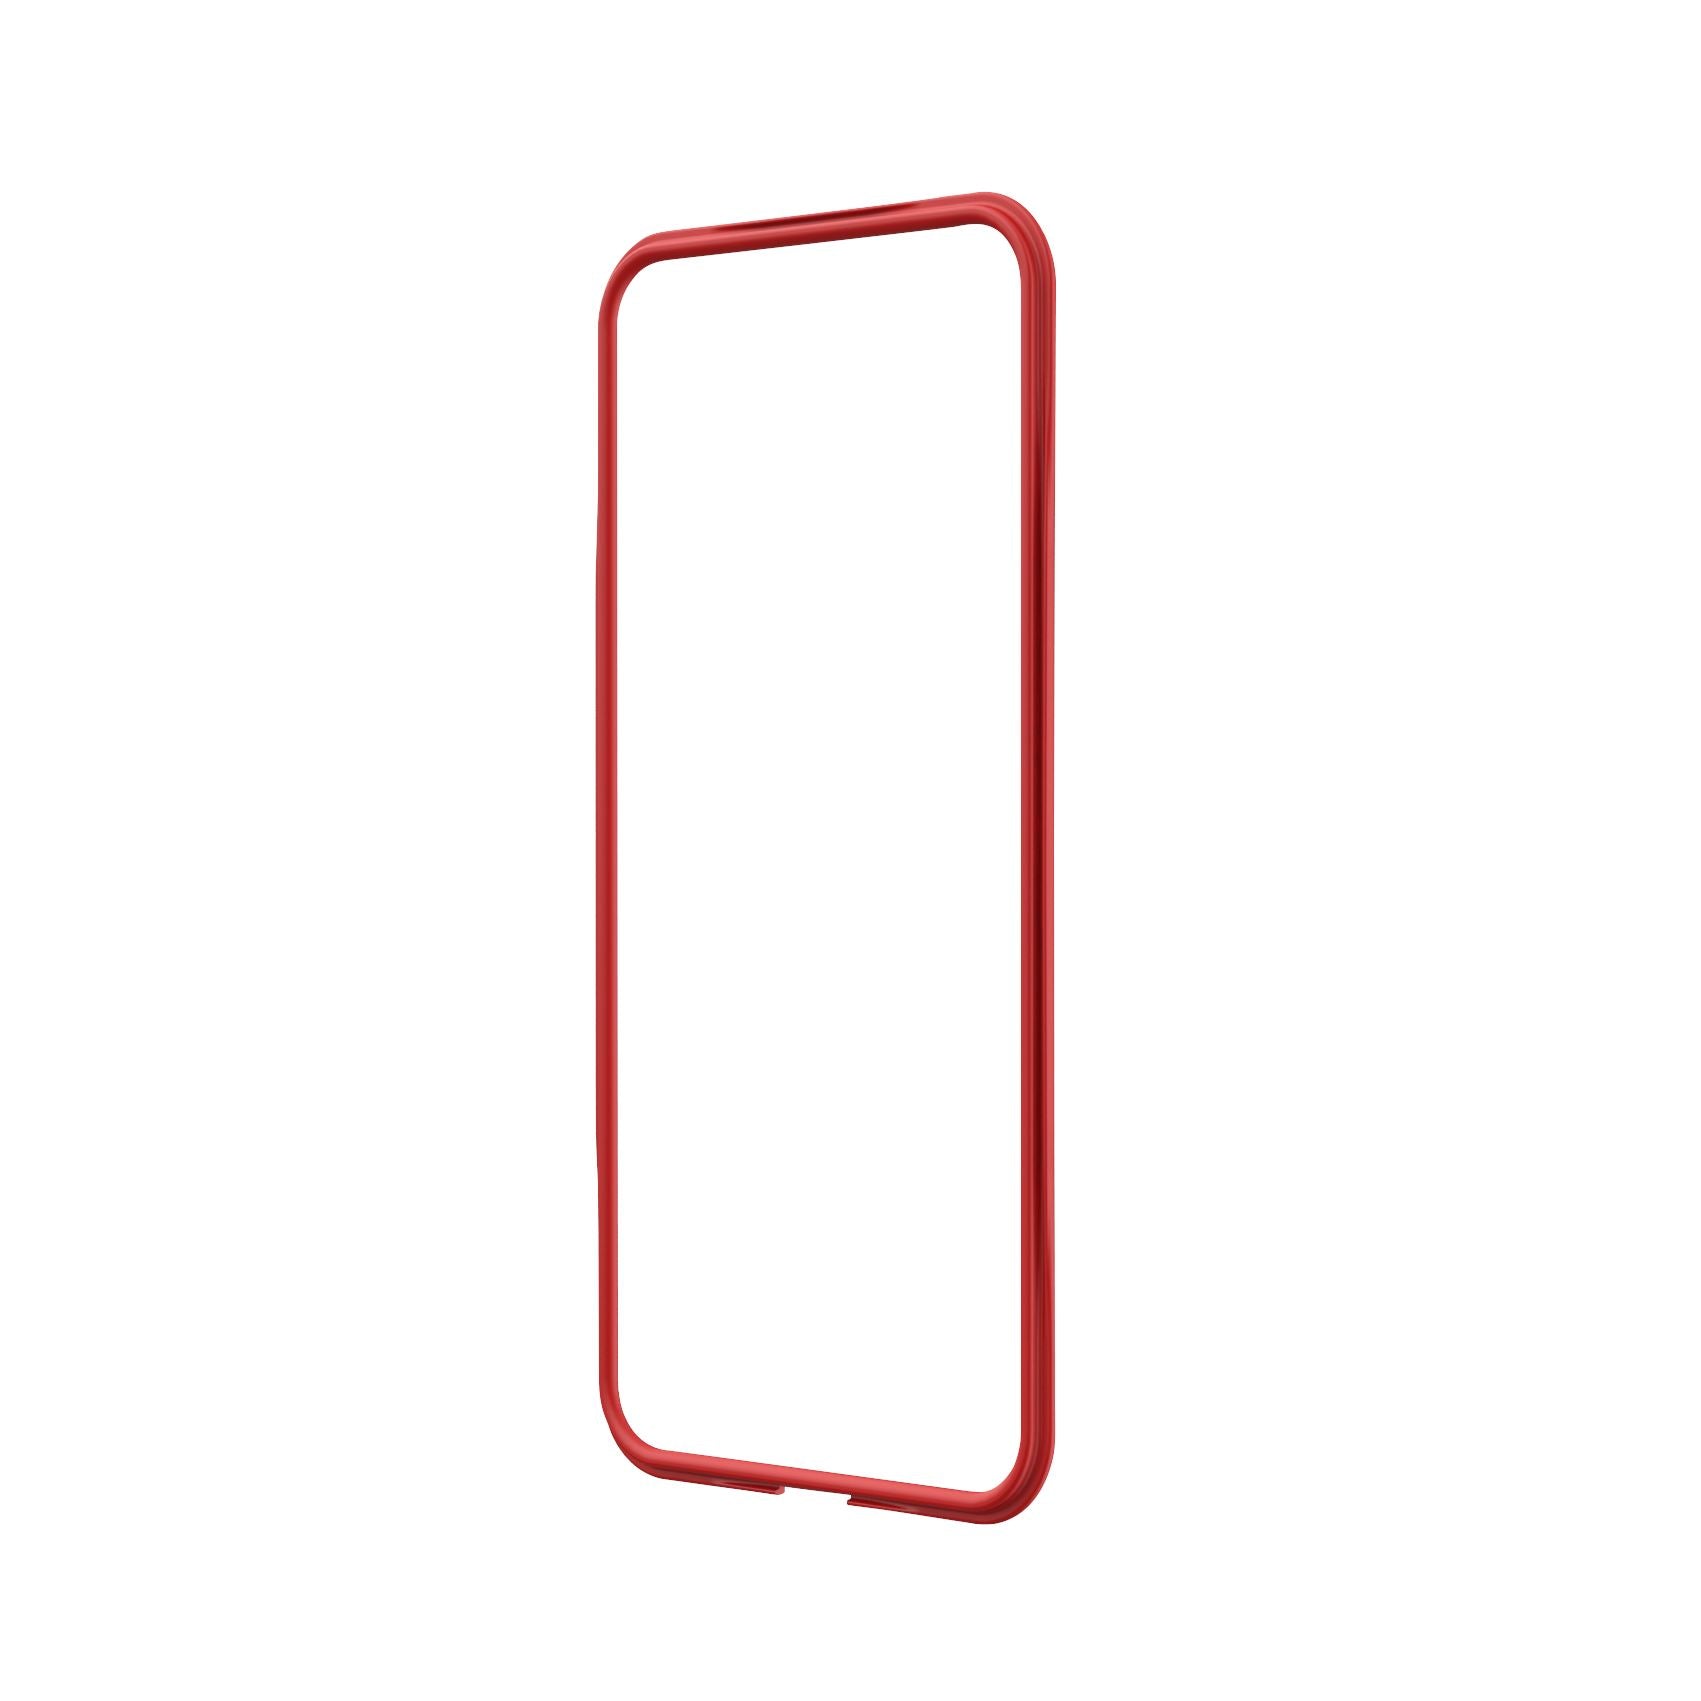 RhinoShield Mod NX Modular Case for iPhone 12 Series (2020) iPhone 12 Series RhinoShield iPhone 12/12 Pro 6.1" Red (Rim) 